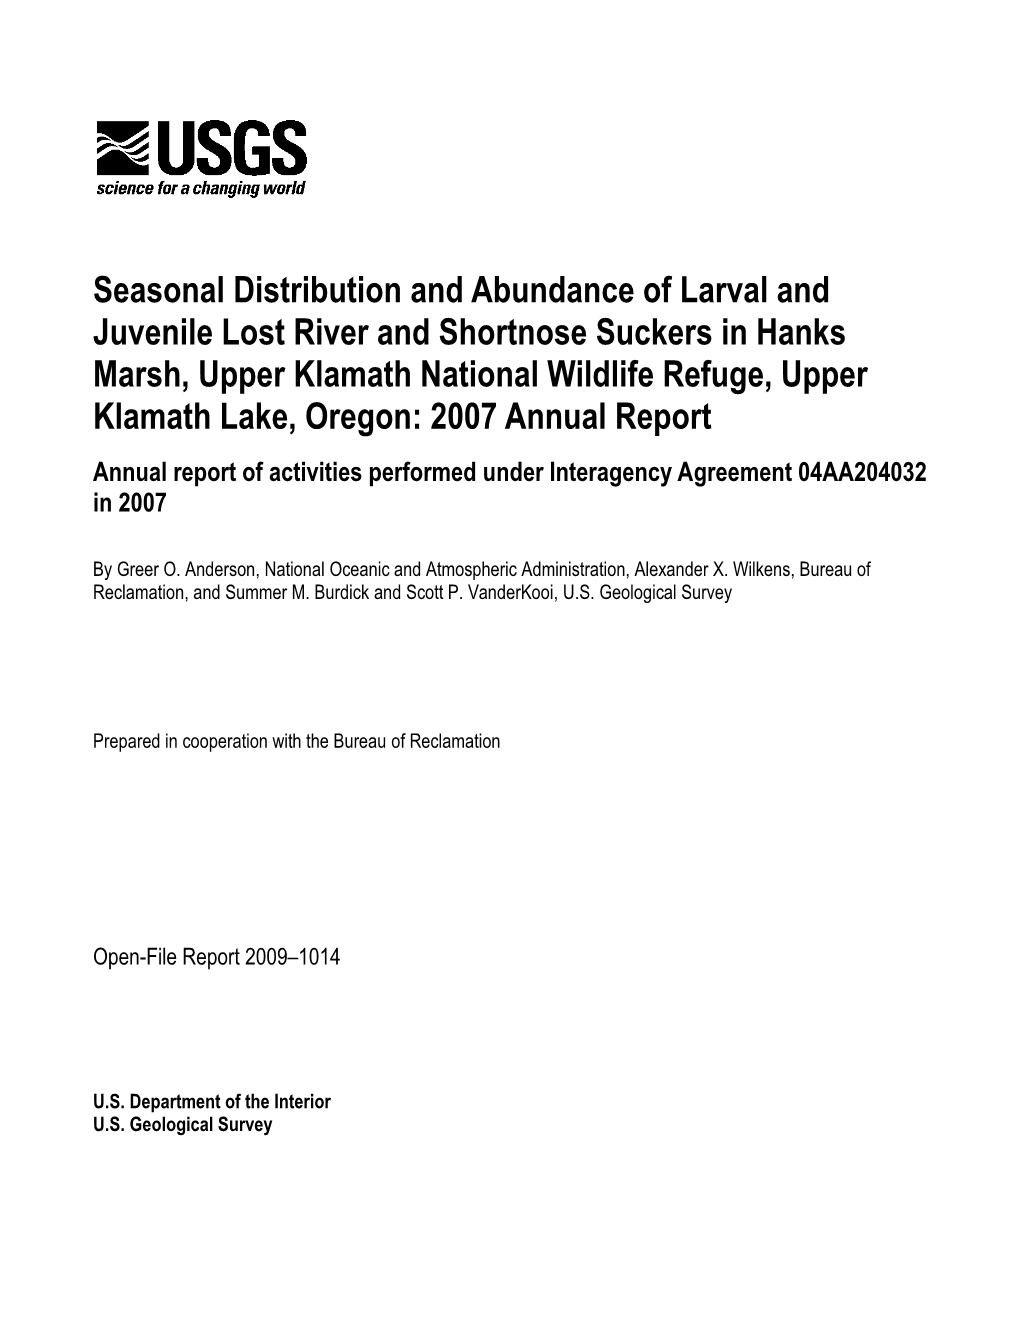 Seasonal Distribution and Abundance of Larval and Juvenile Lost River